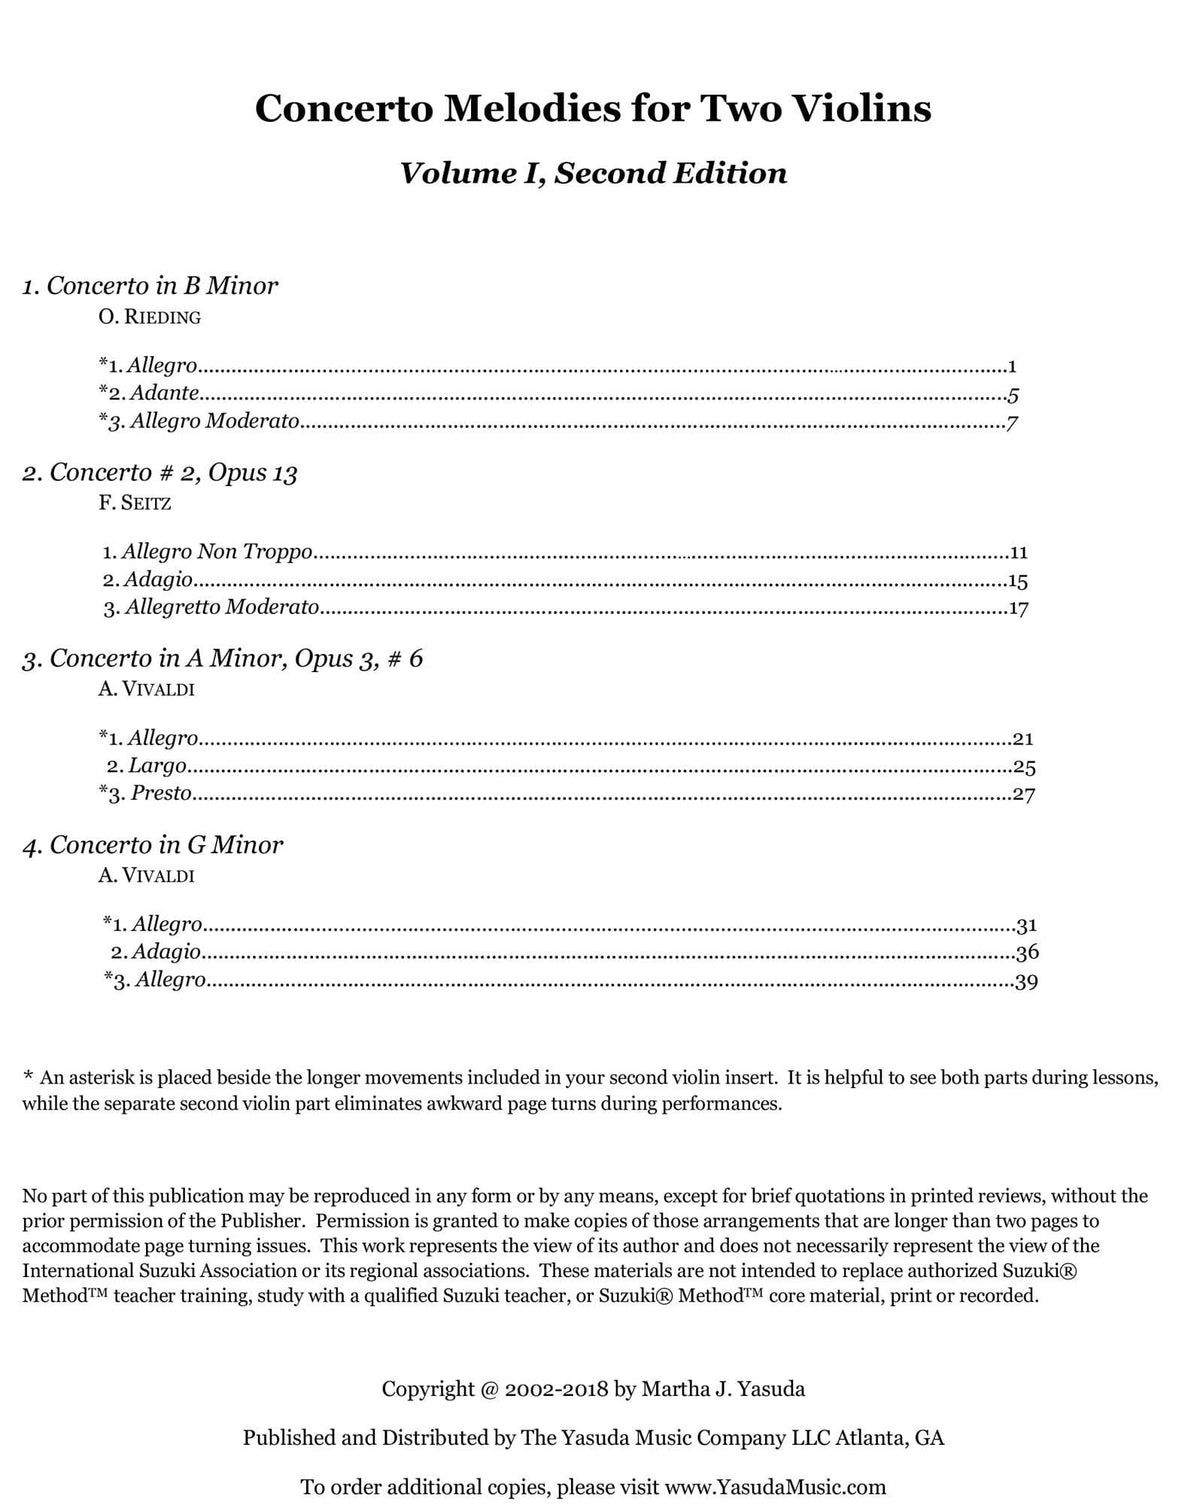 Yasuda, Martha - Concerto Melodies For Two Violins, Volume I, 2nd Edition  - Digital Download